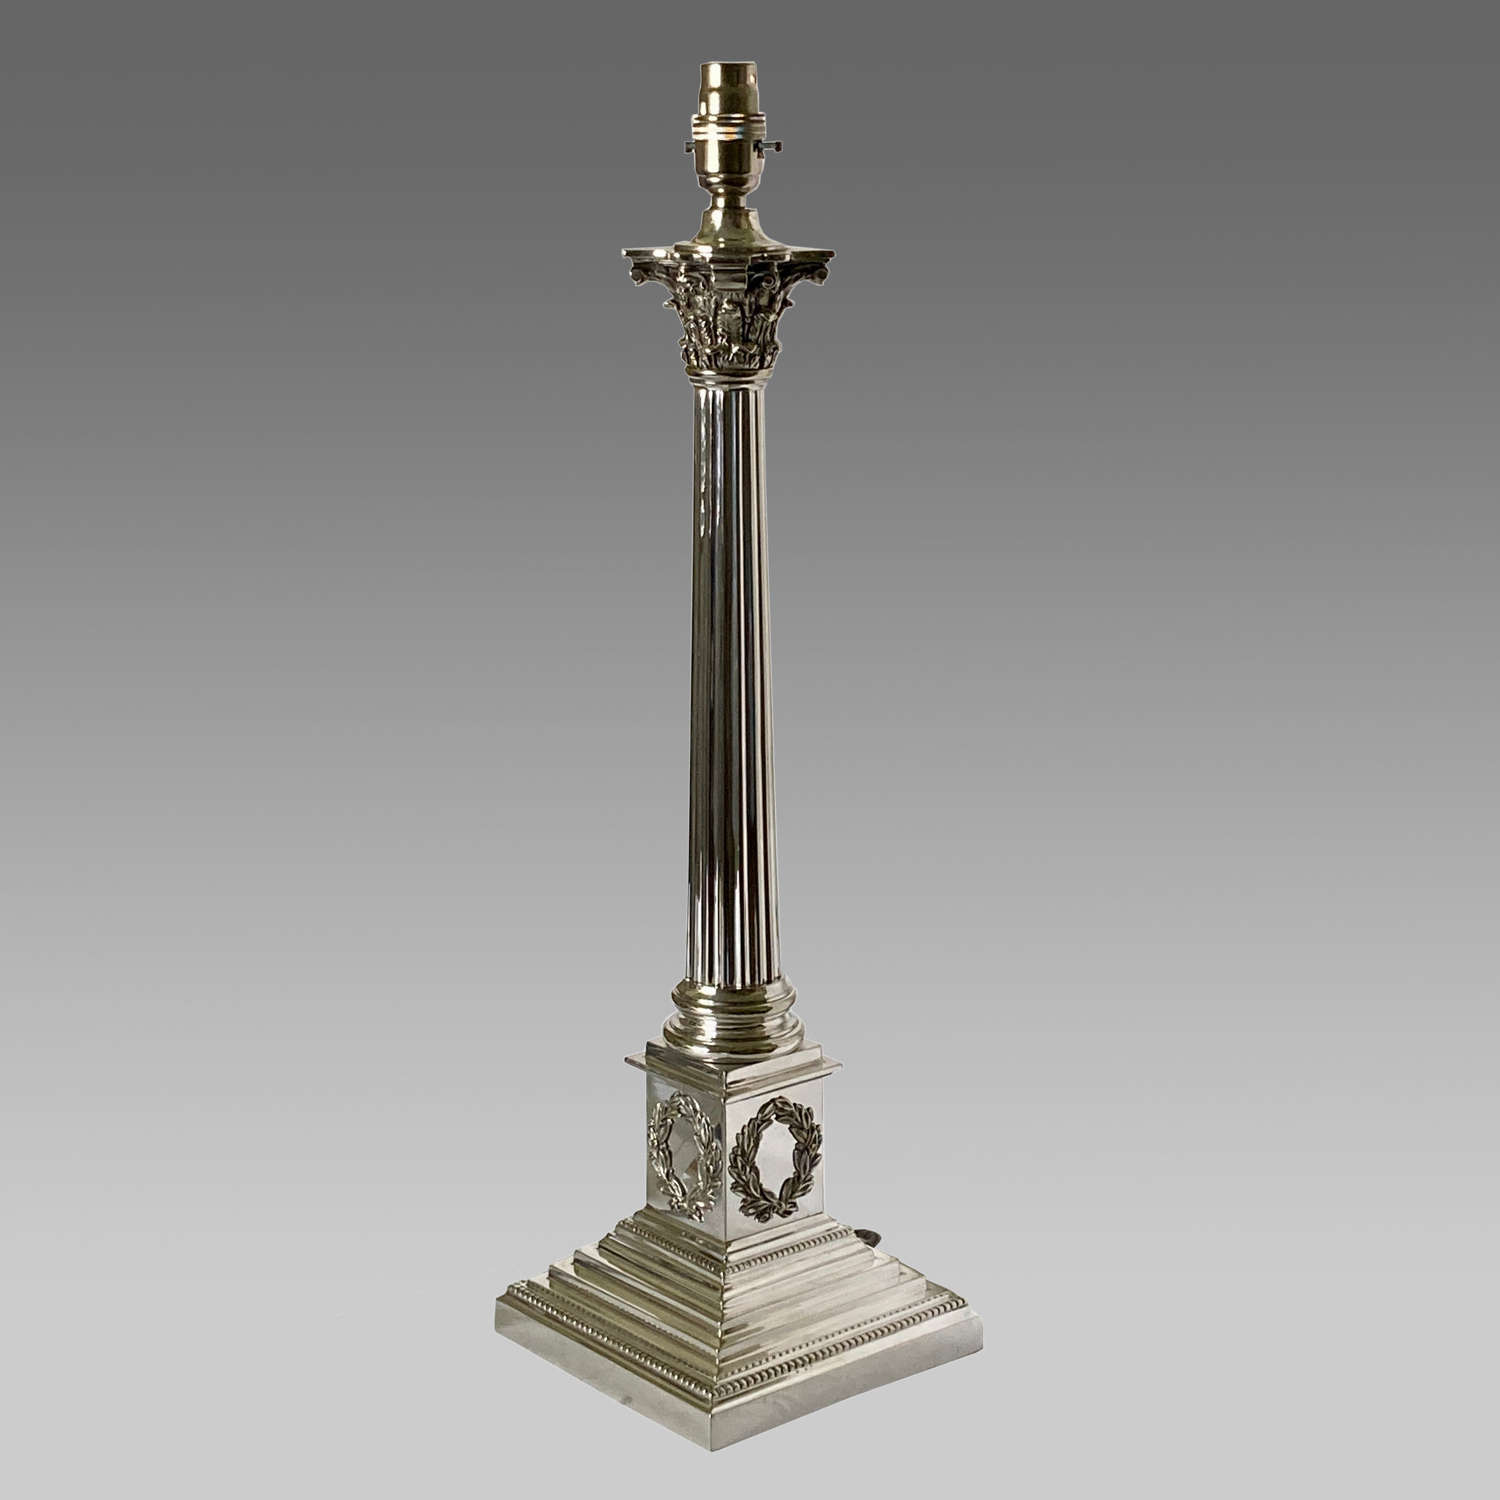 19th century silver-plated Corinthian column lamp